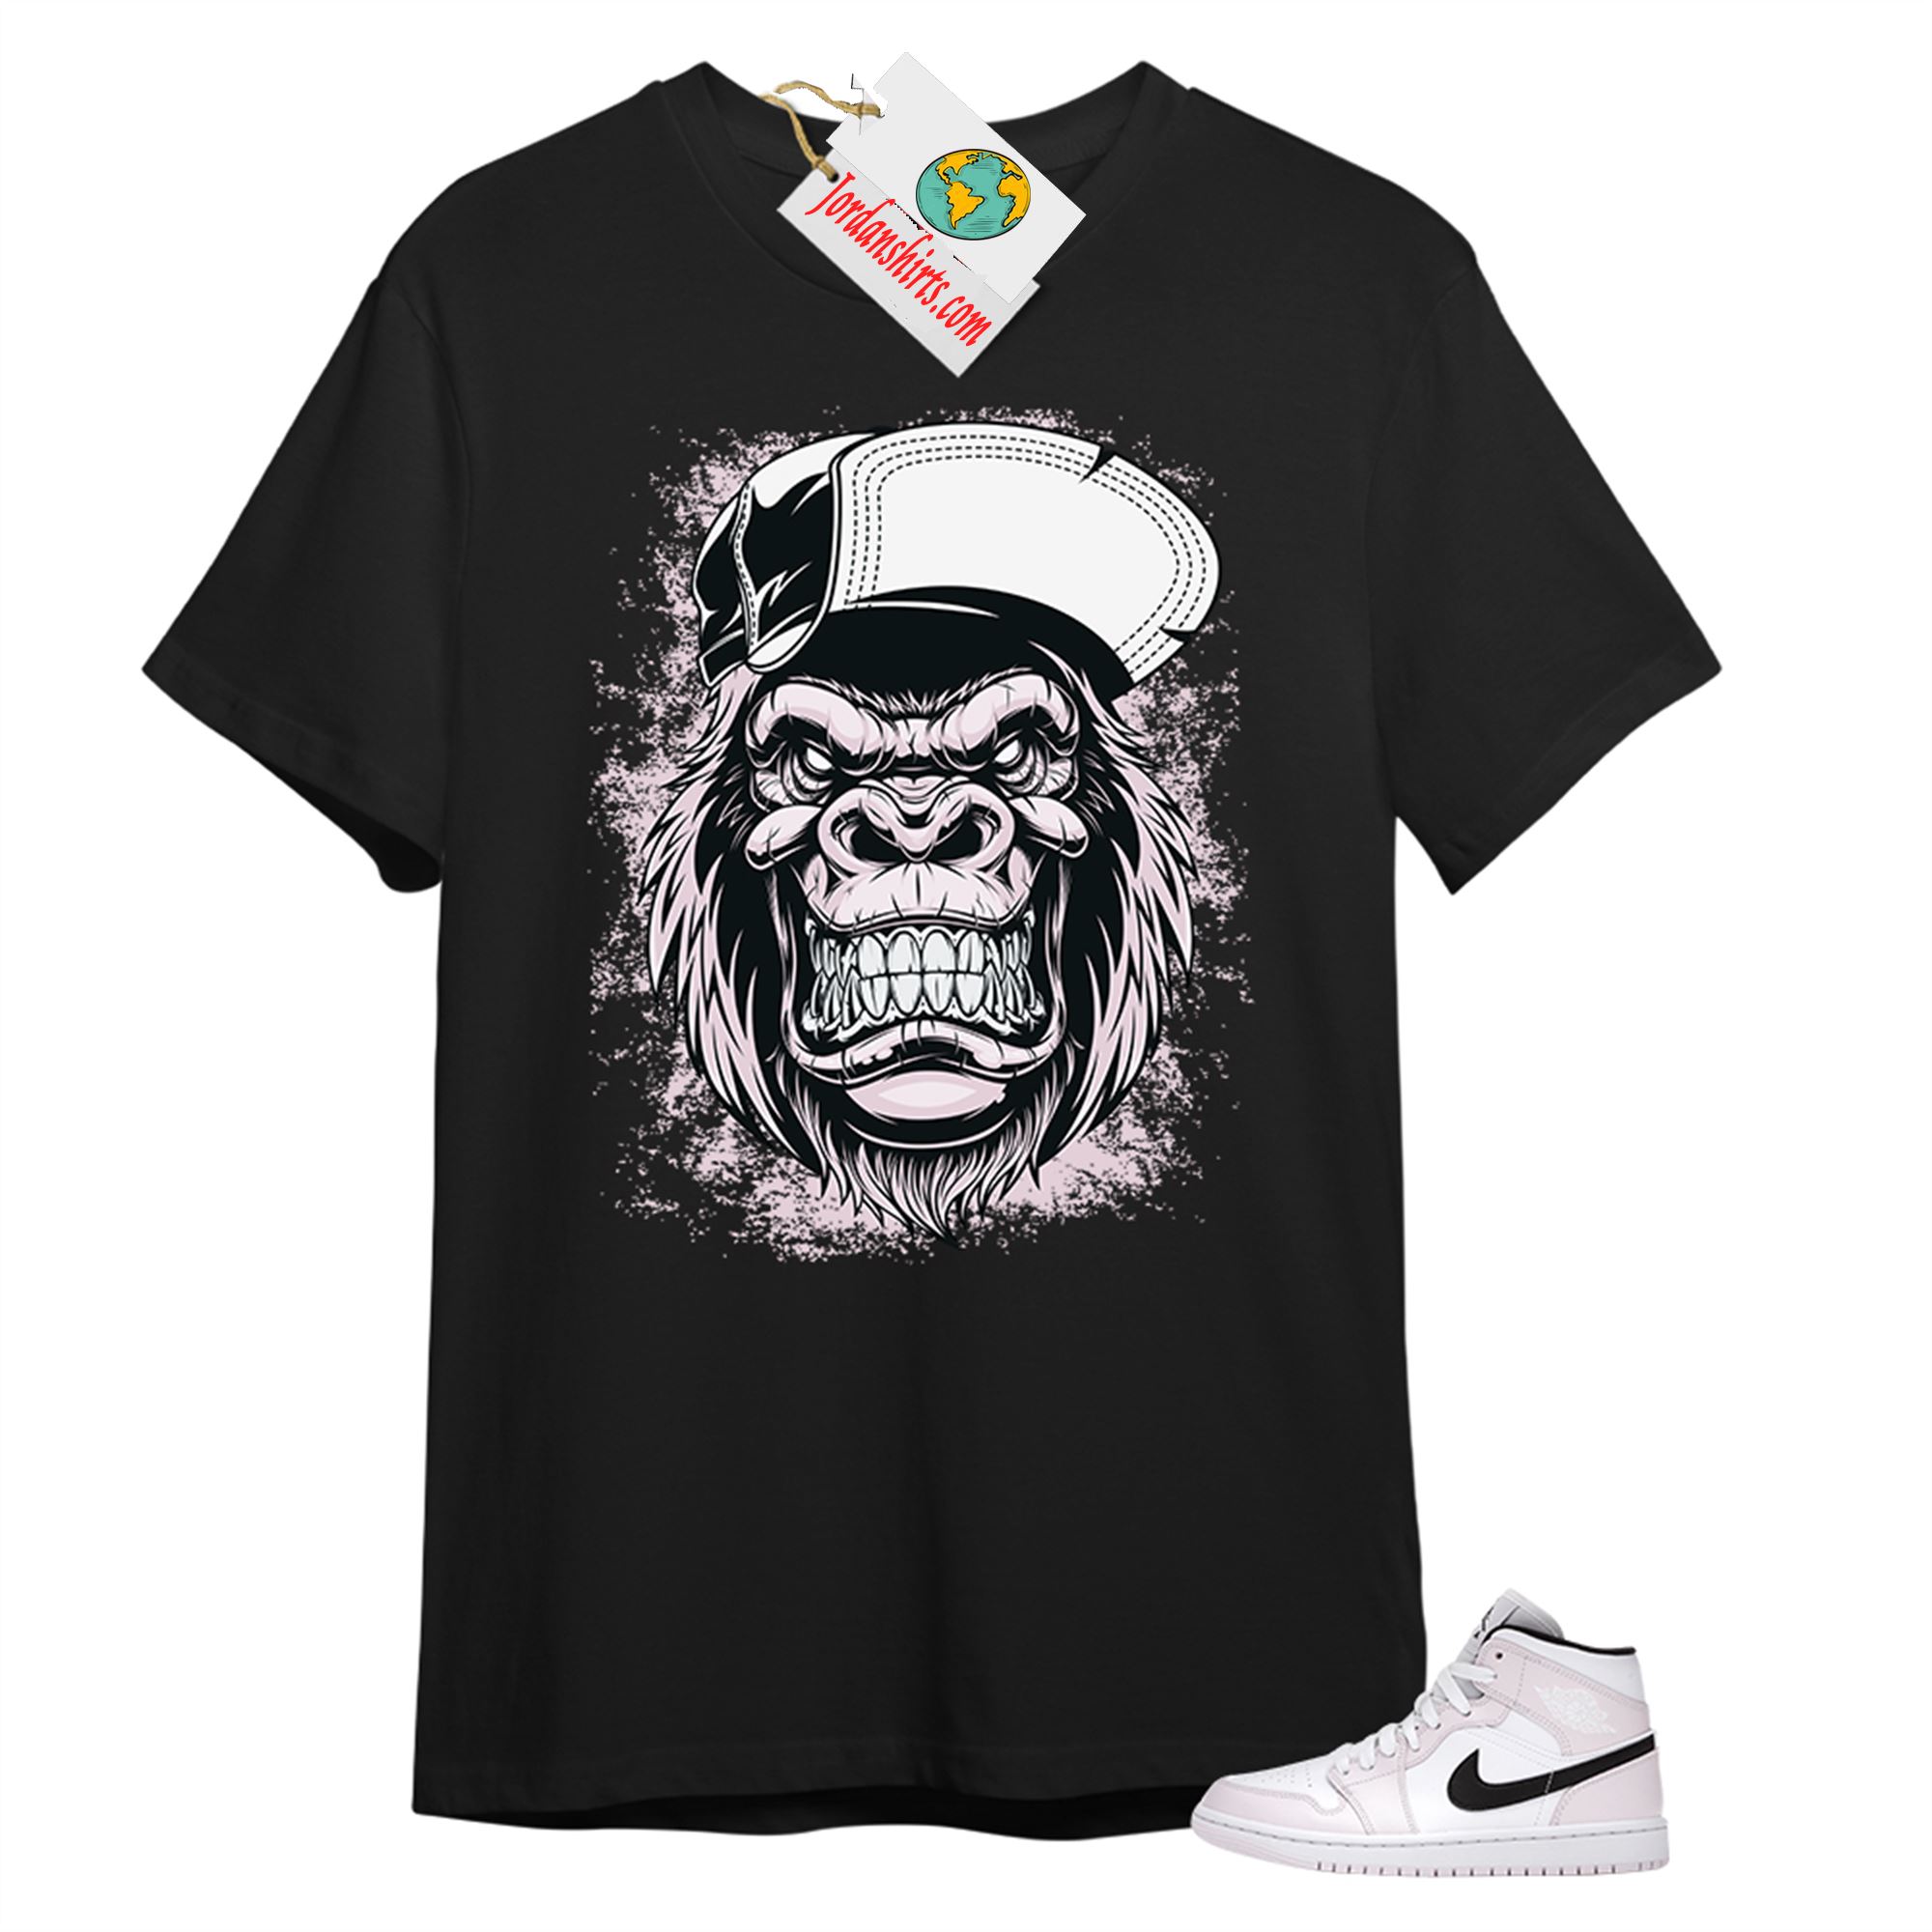 Jordan 1 Shirt, Ferocious Gorilla Black T-shirt Air Jordan 1 Barely Rose 1s Plus Size Up To 5xl